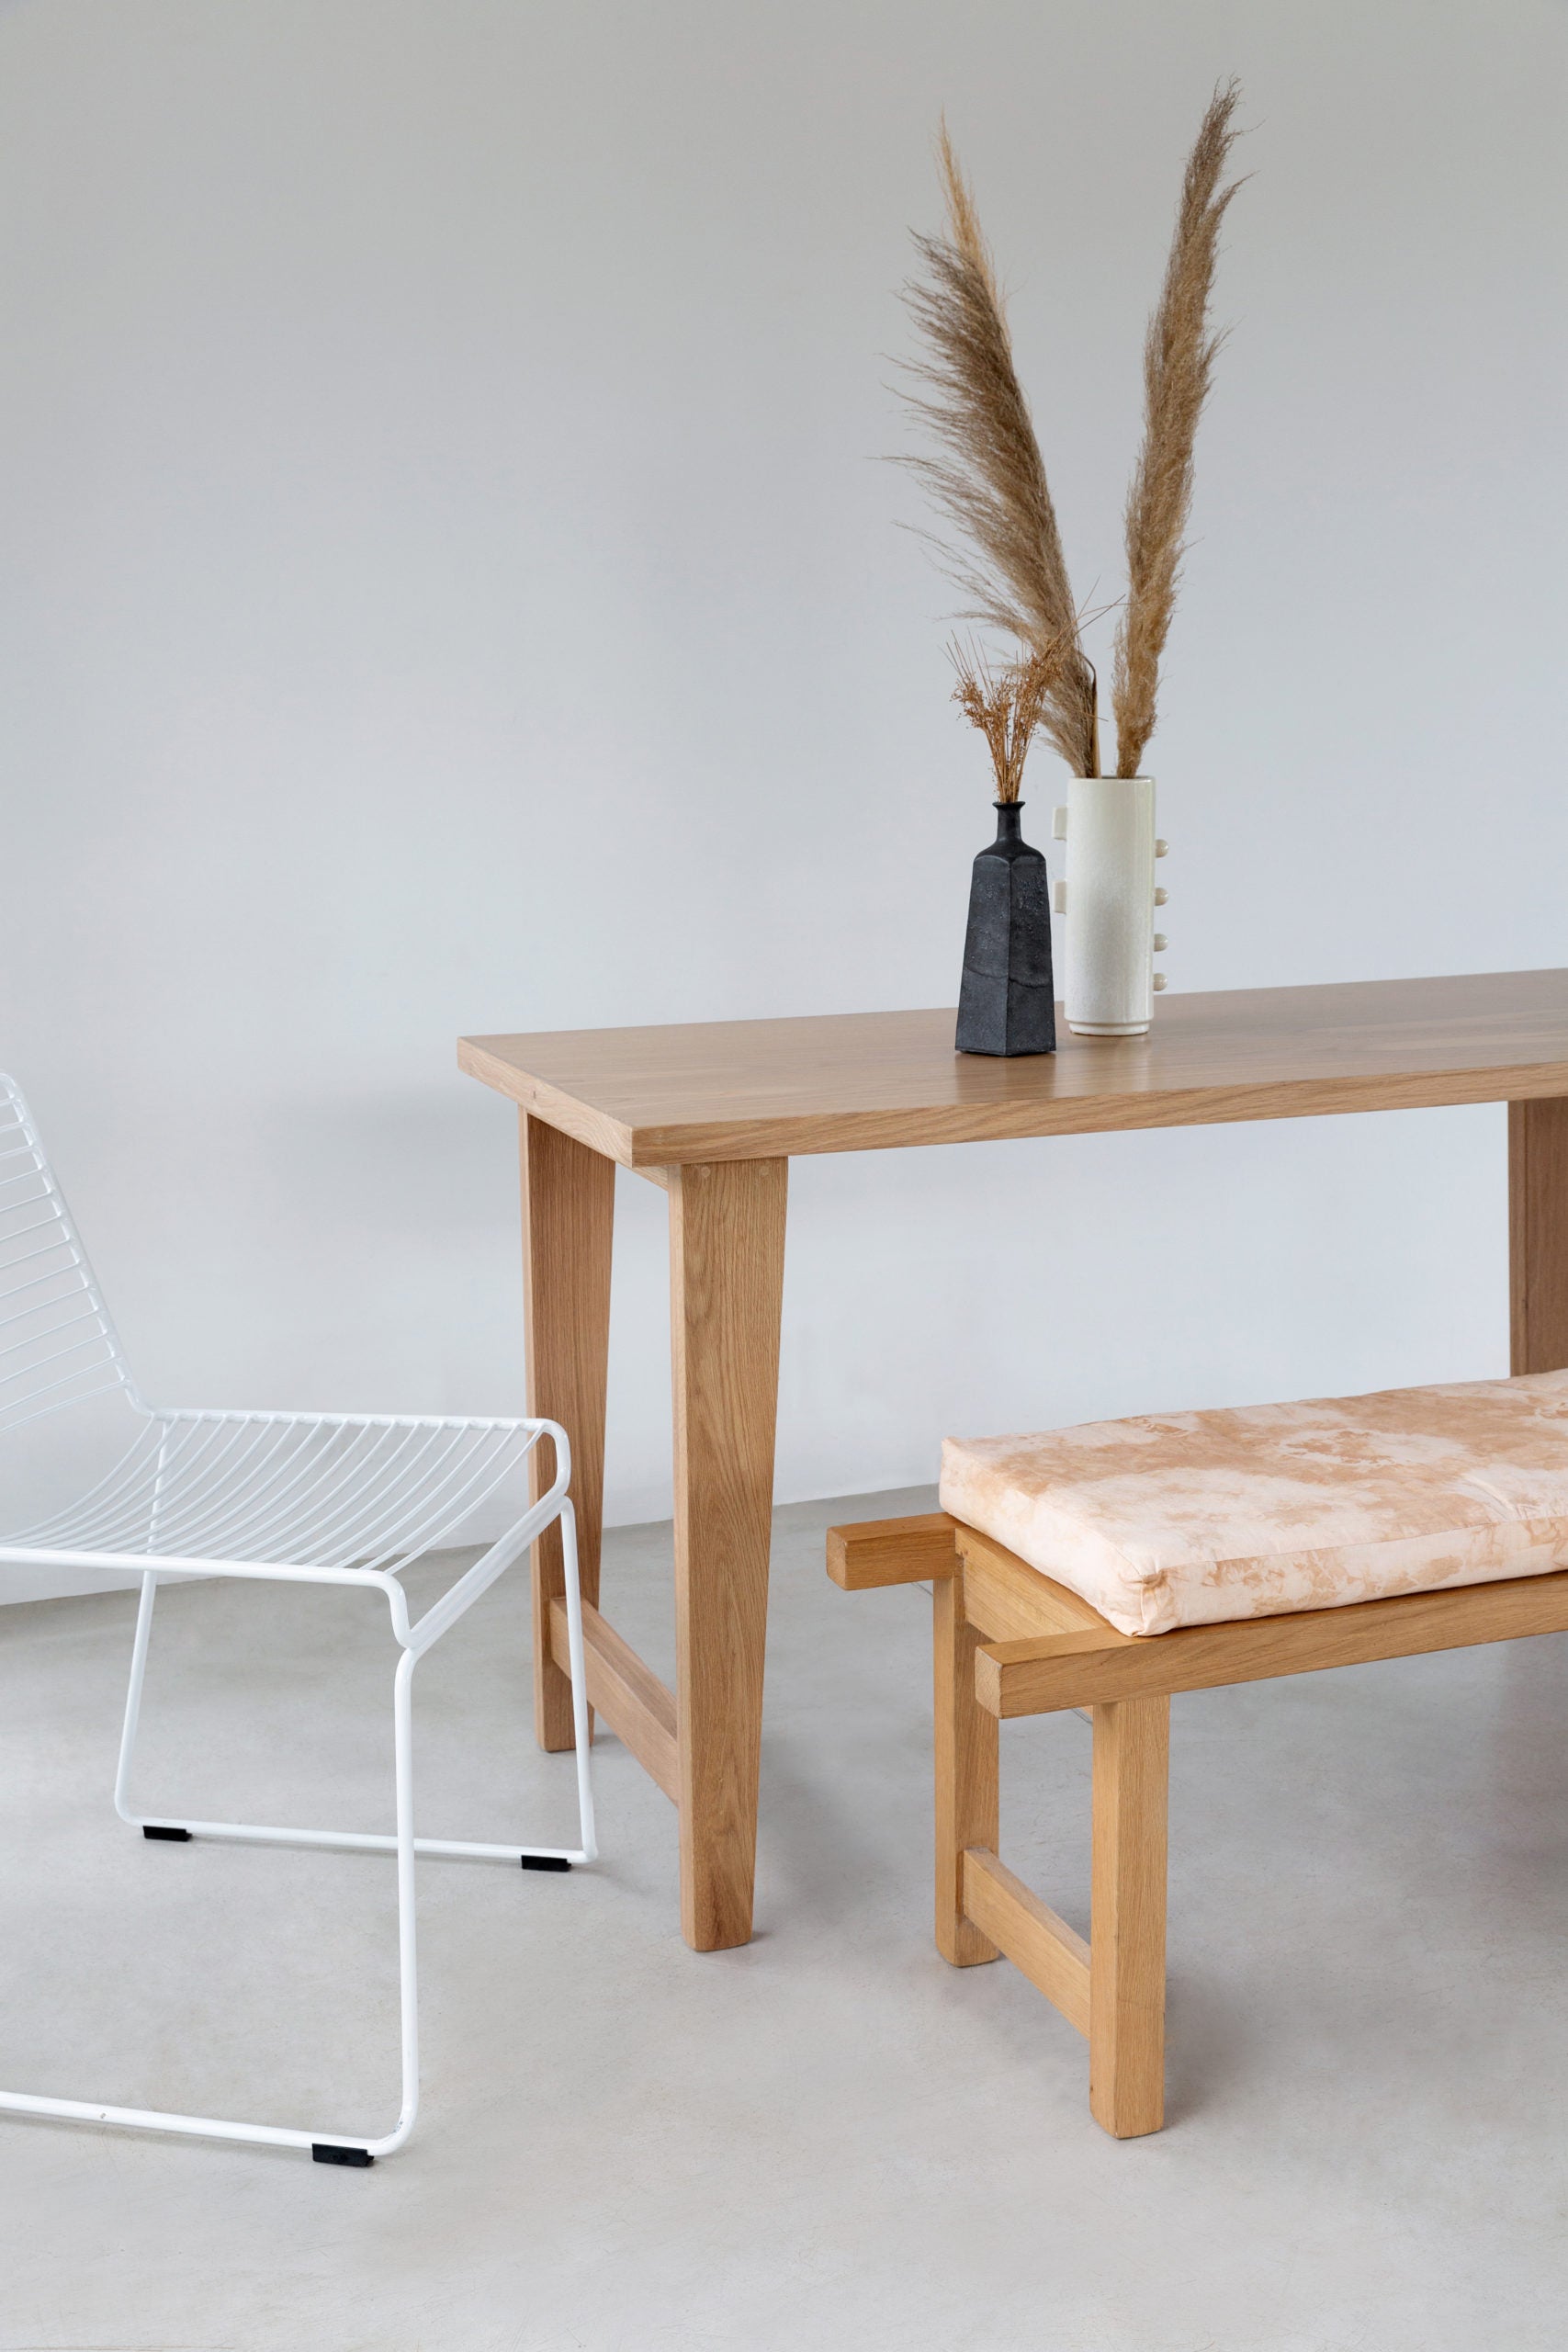 The Danish. Modern Table or Desk - Trestle South Africa